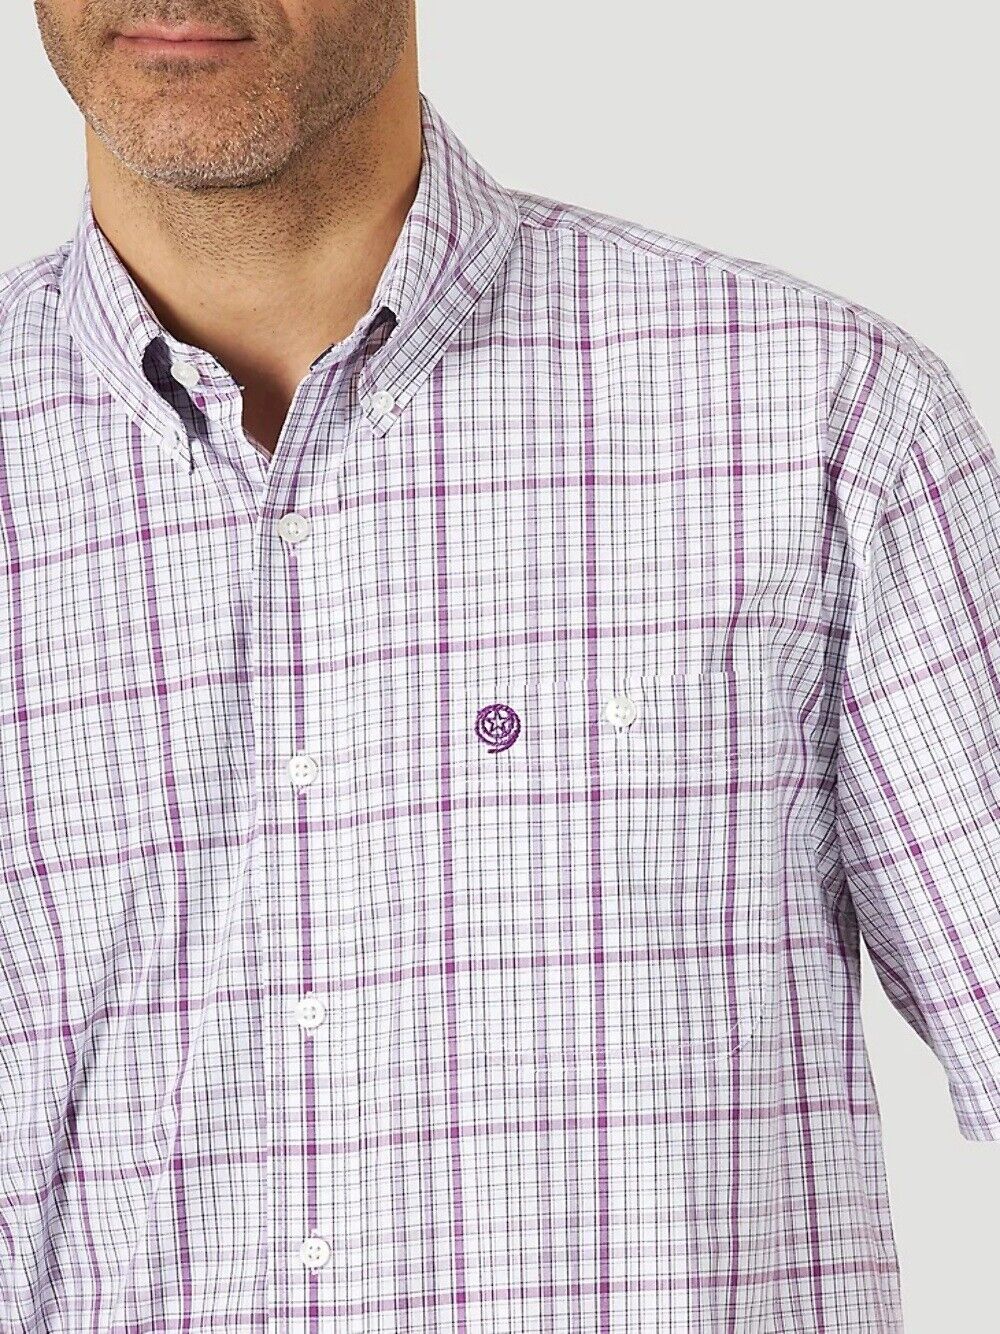 Wrangler - George Strait Collection Short Sleeve Purple Plaid Shirt